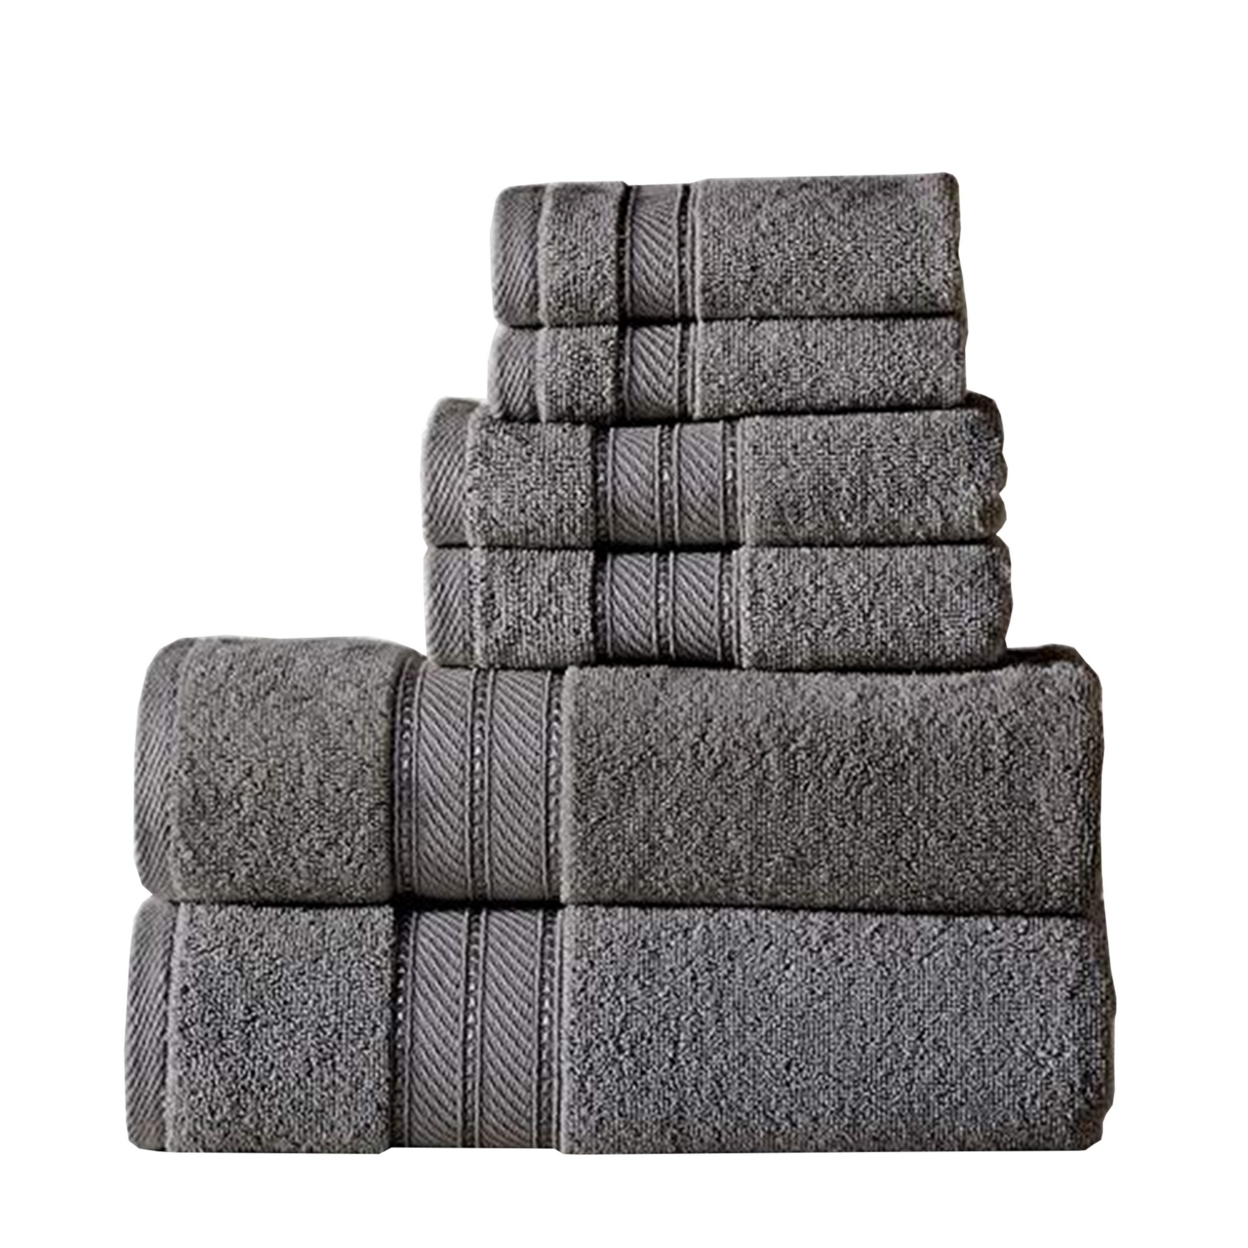 Bergamo 6 Piece Spun Loft Towel Set With Twill Weaving The Urban Port, Charcoal Gray- Saltoro Sherpi